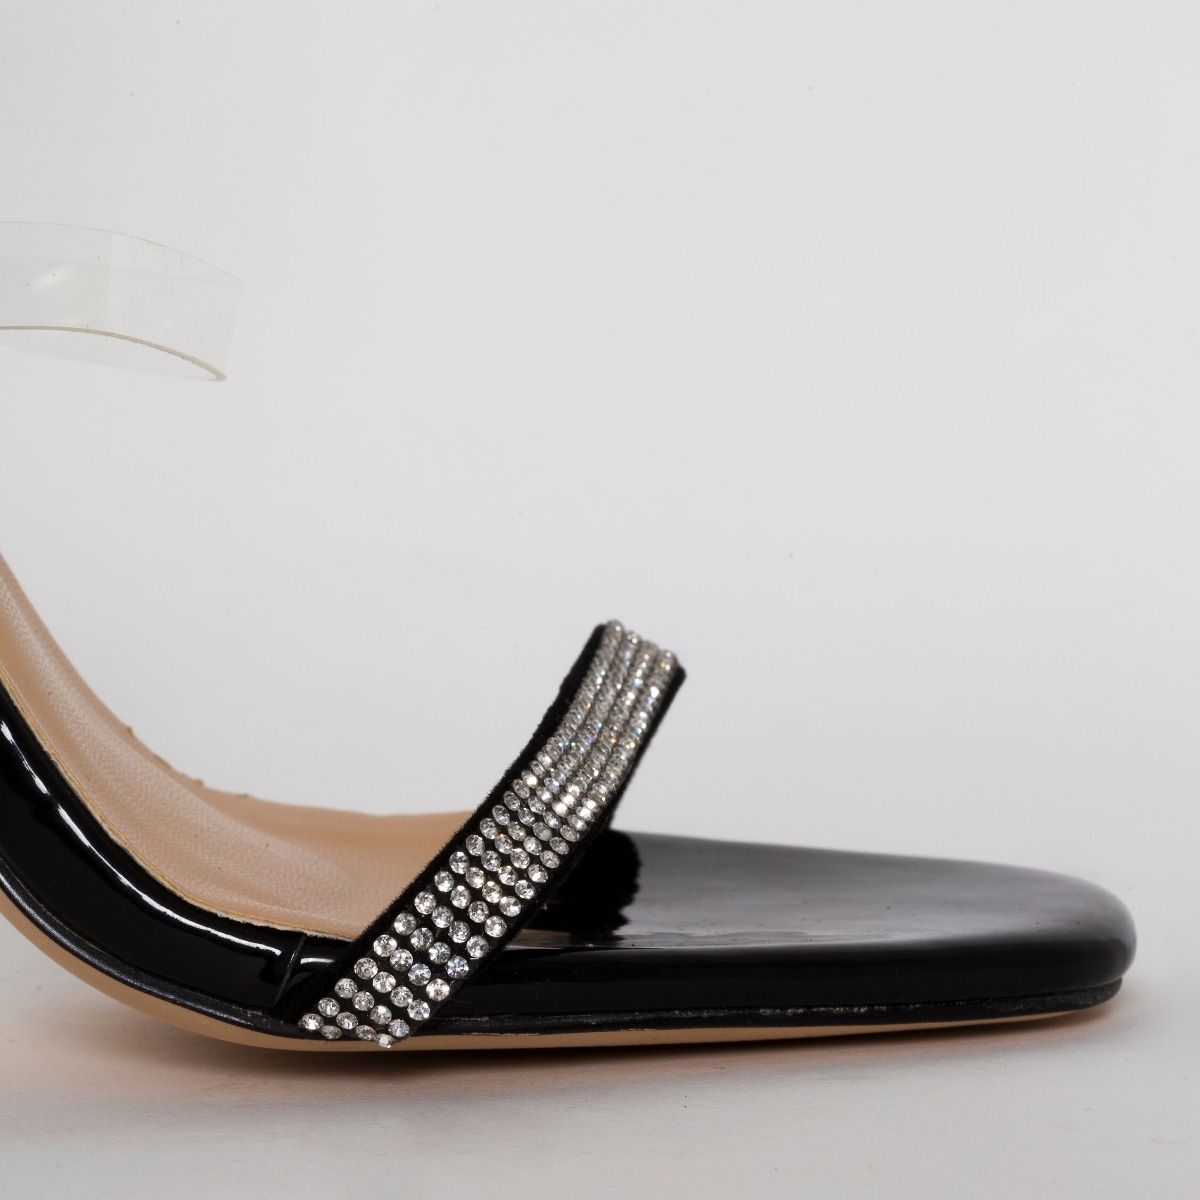 Anastacia Black Patent Diamante Cuff Stiletto Heels